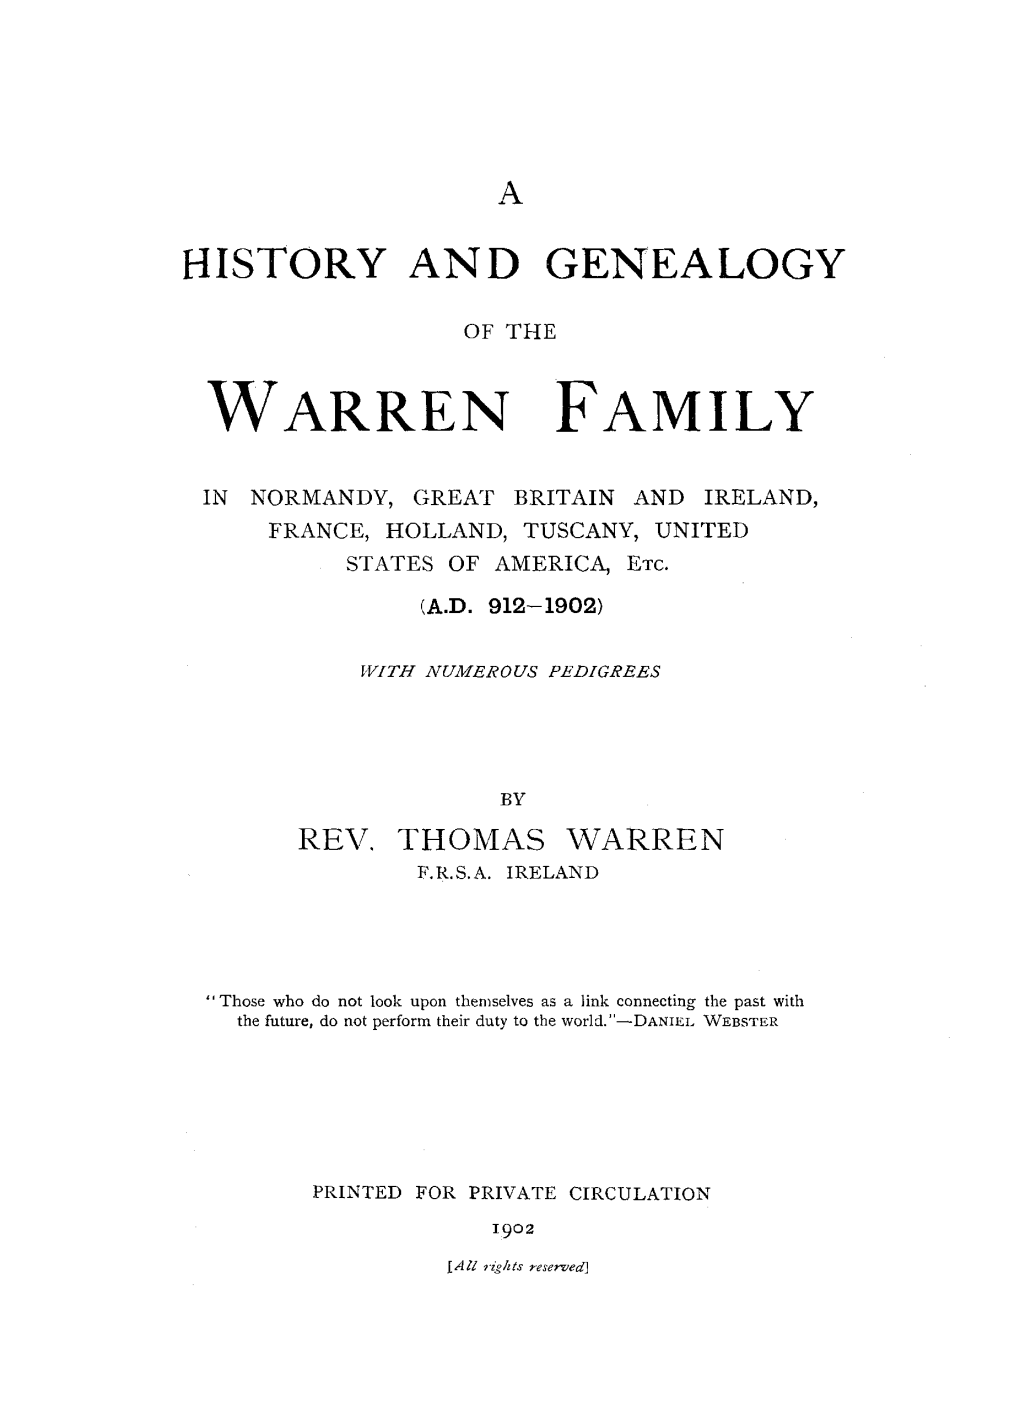 Warren Family